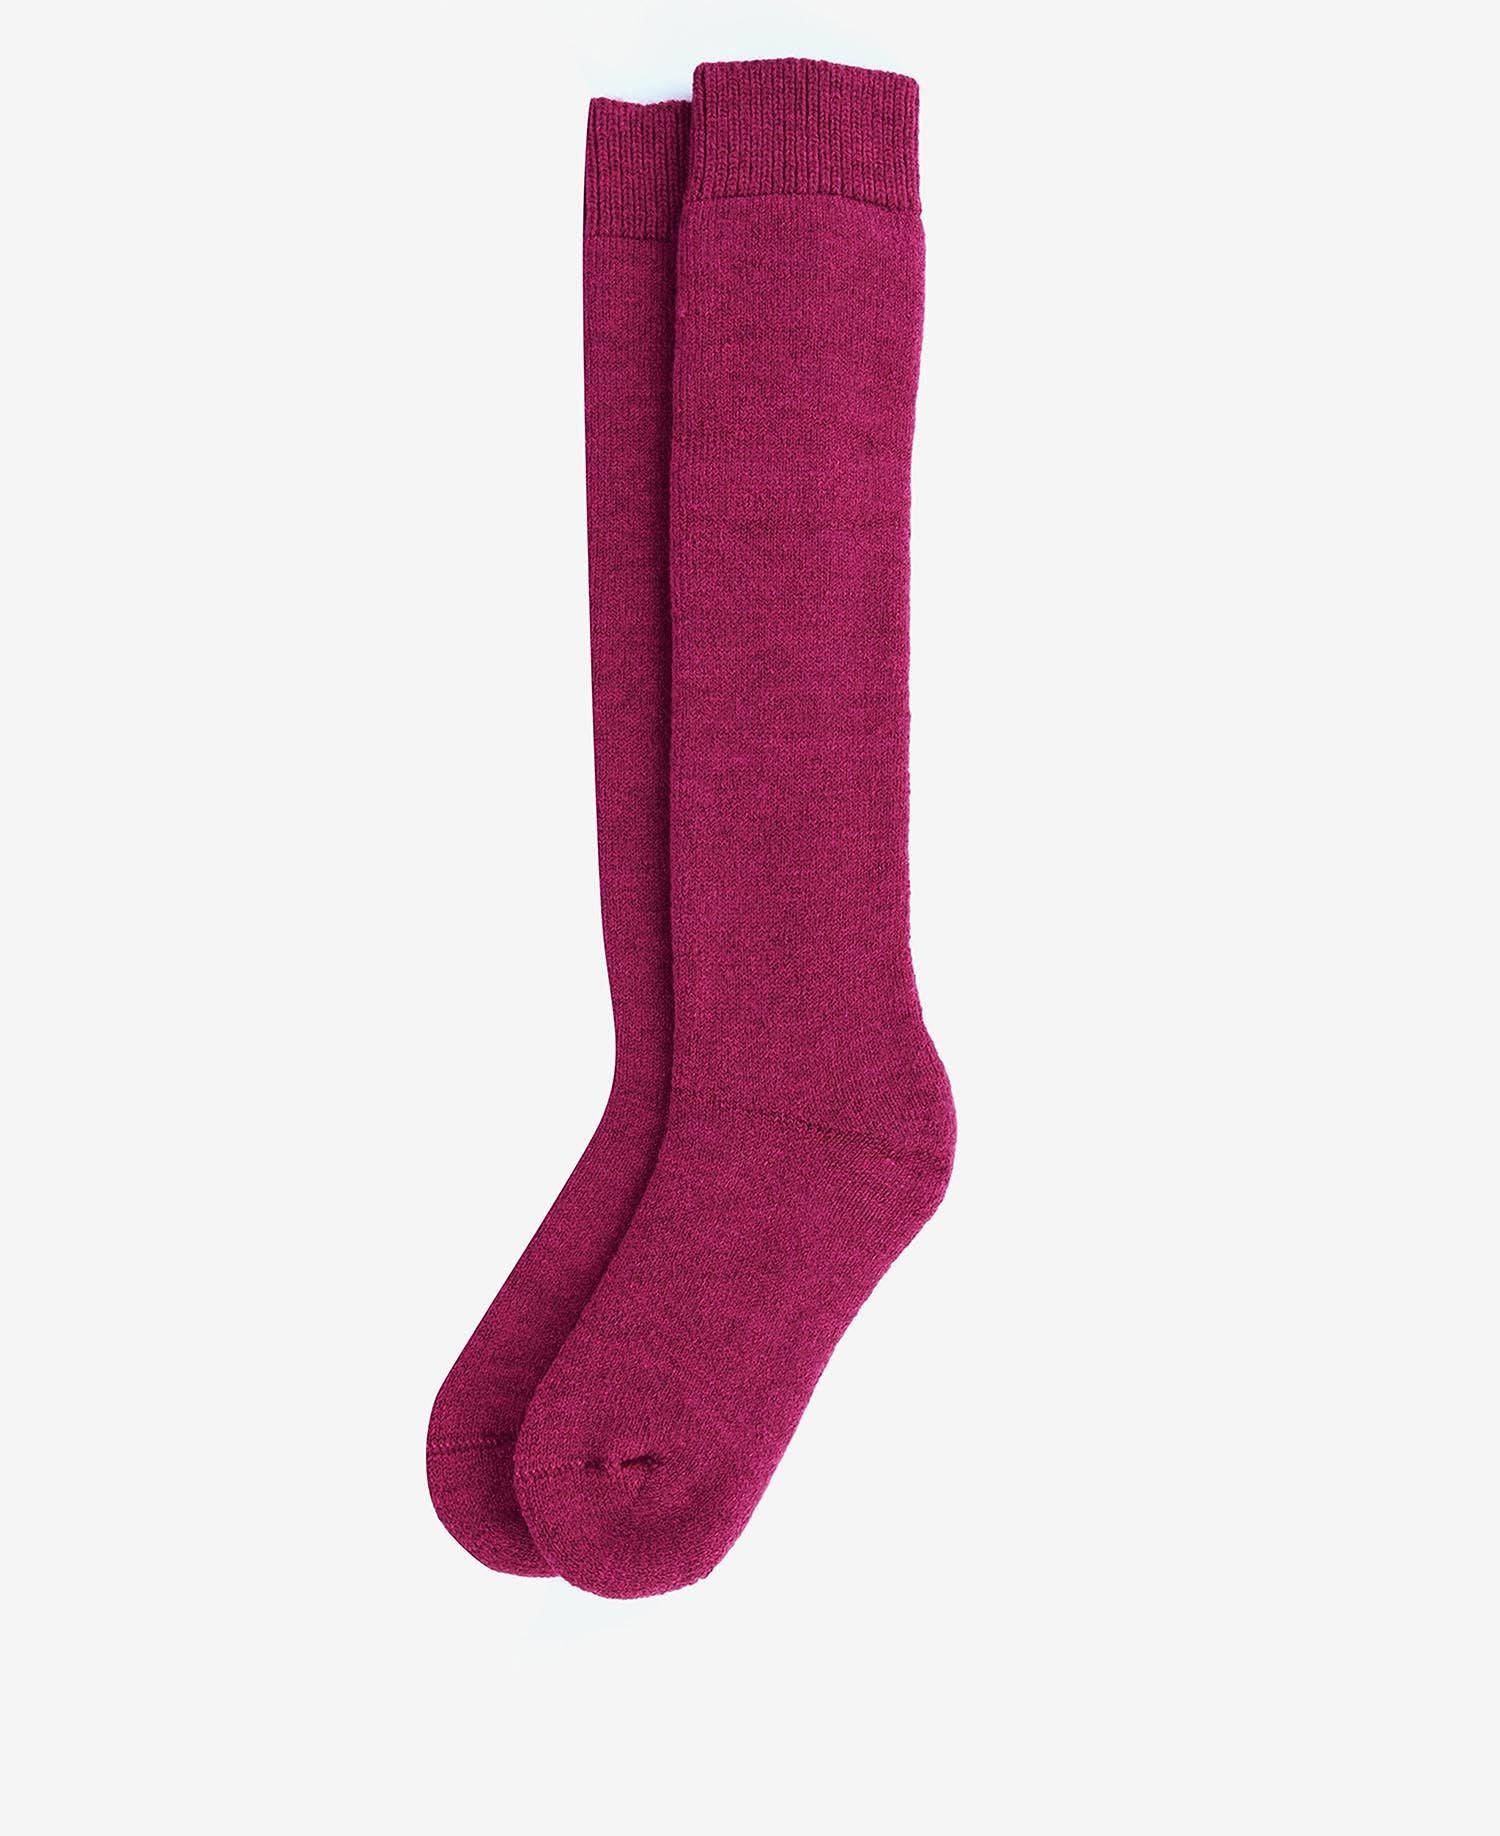 Barbour Wellington Socks